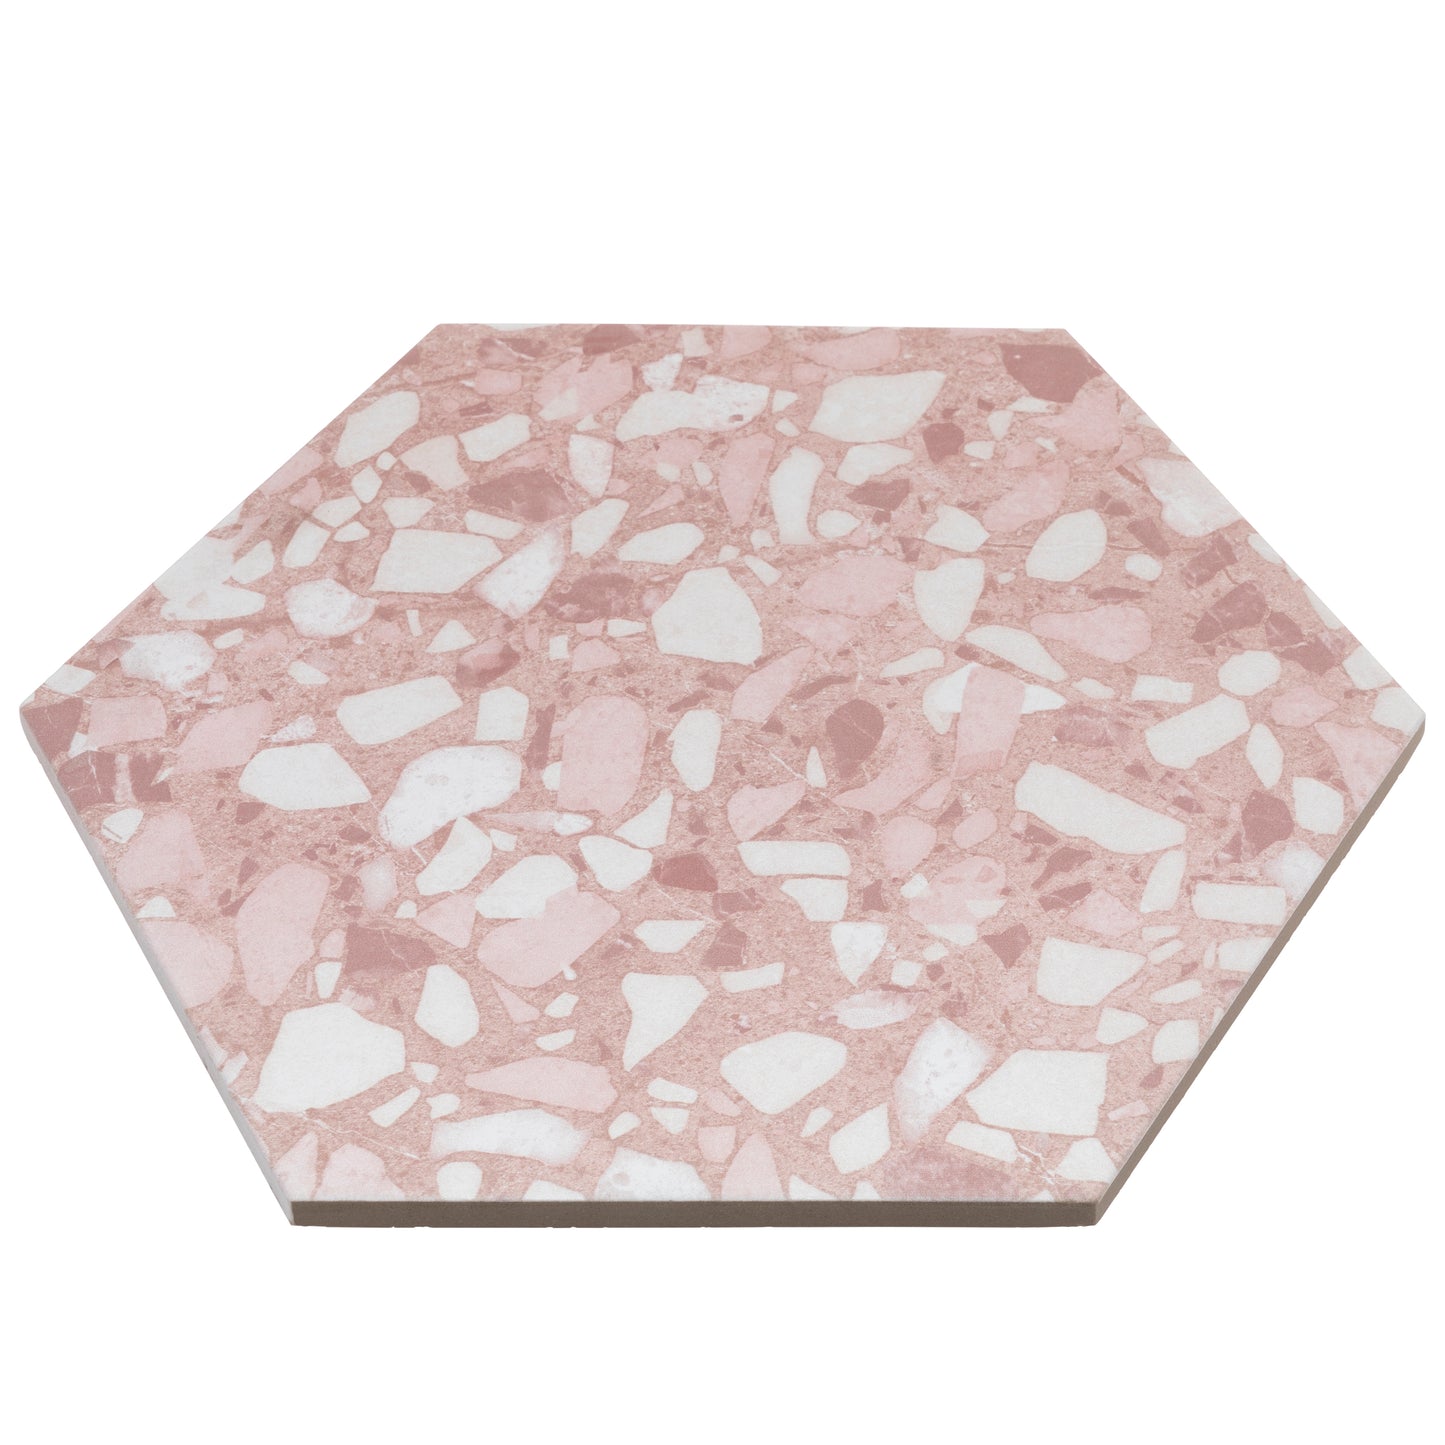 9x10 Hexagon Pink Terrazzo porcelain tile - Industry Tile